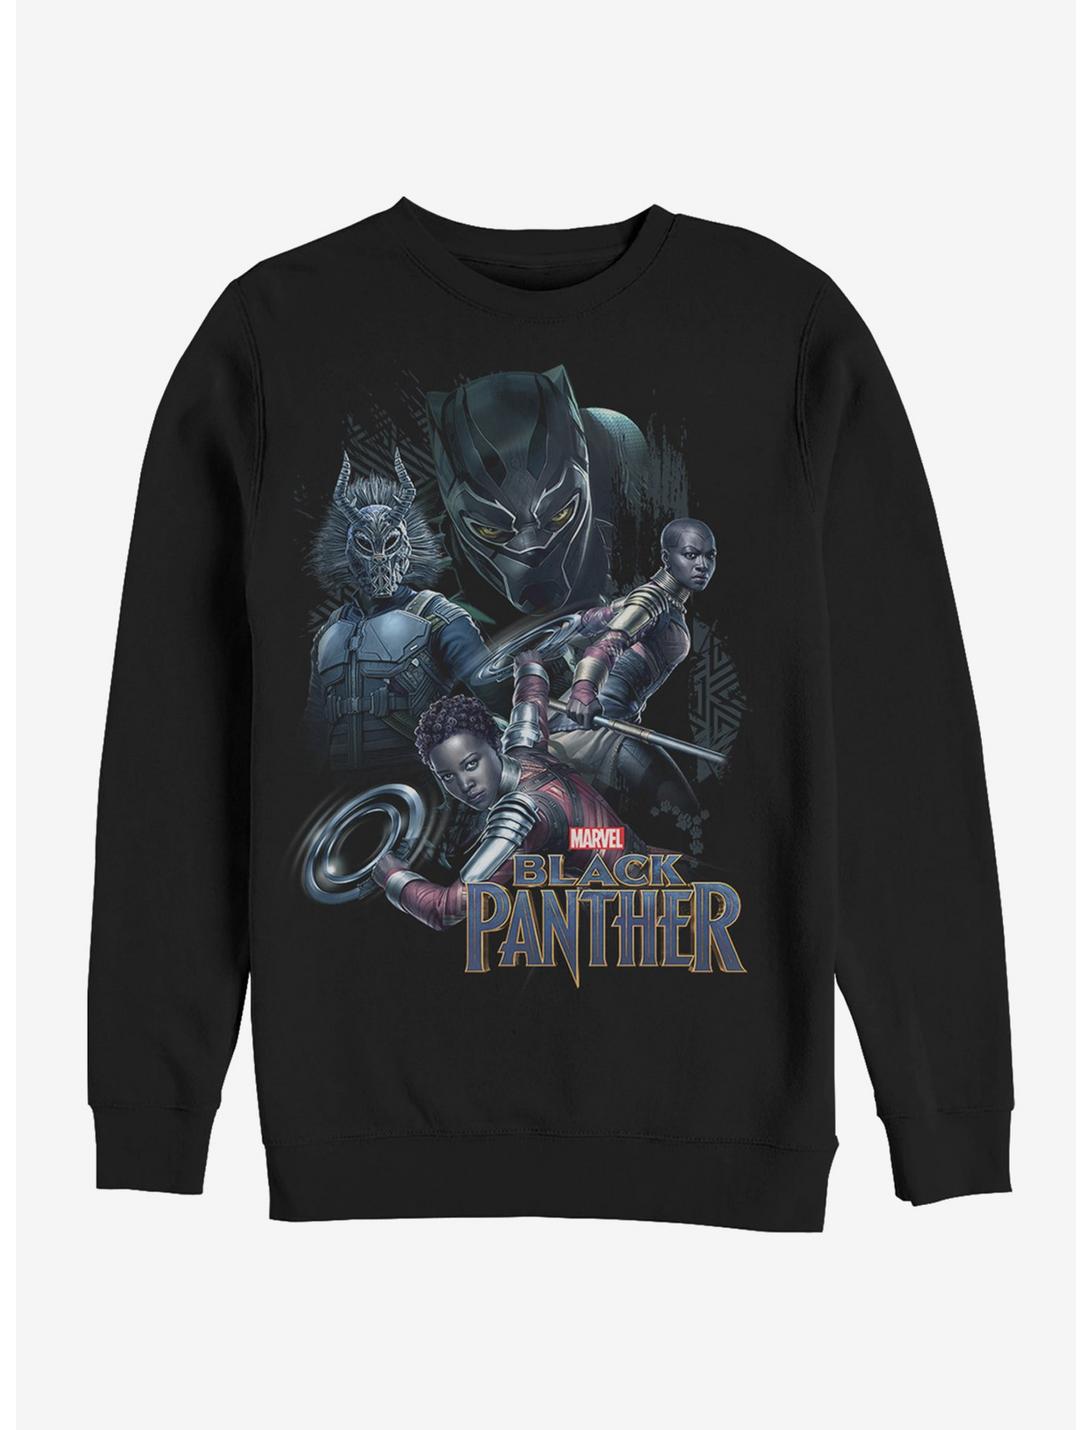 Marvel Black Panther 2018 Character View Sweatshirt, BLACK, hi-res